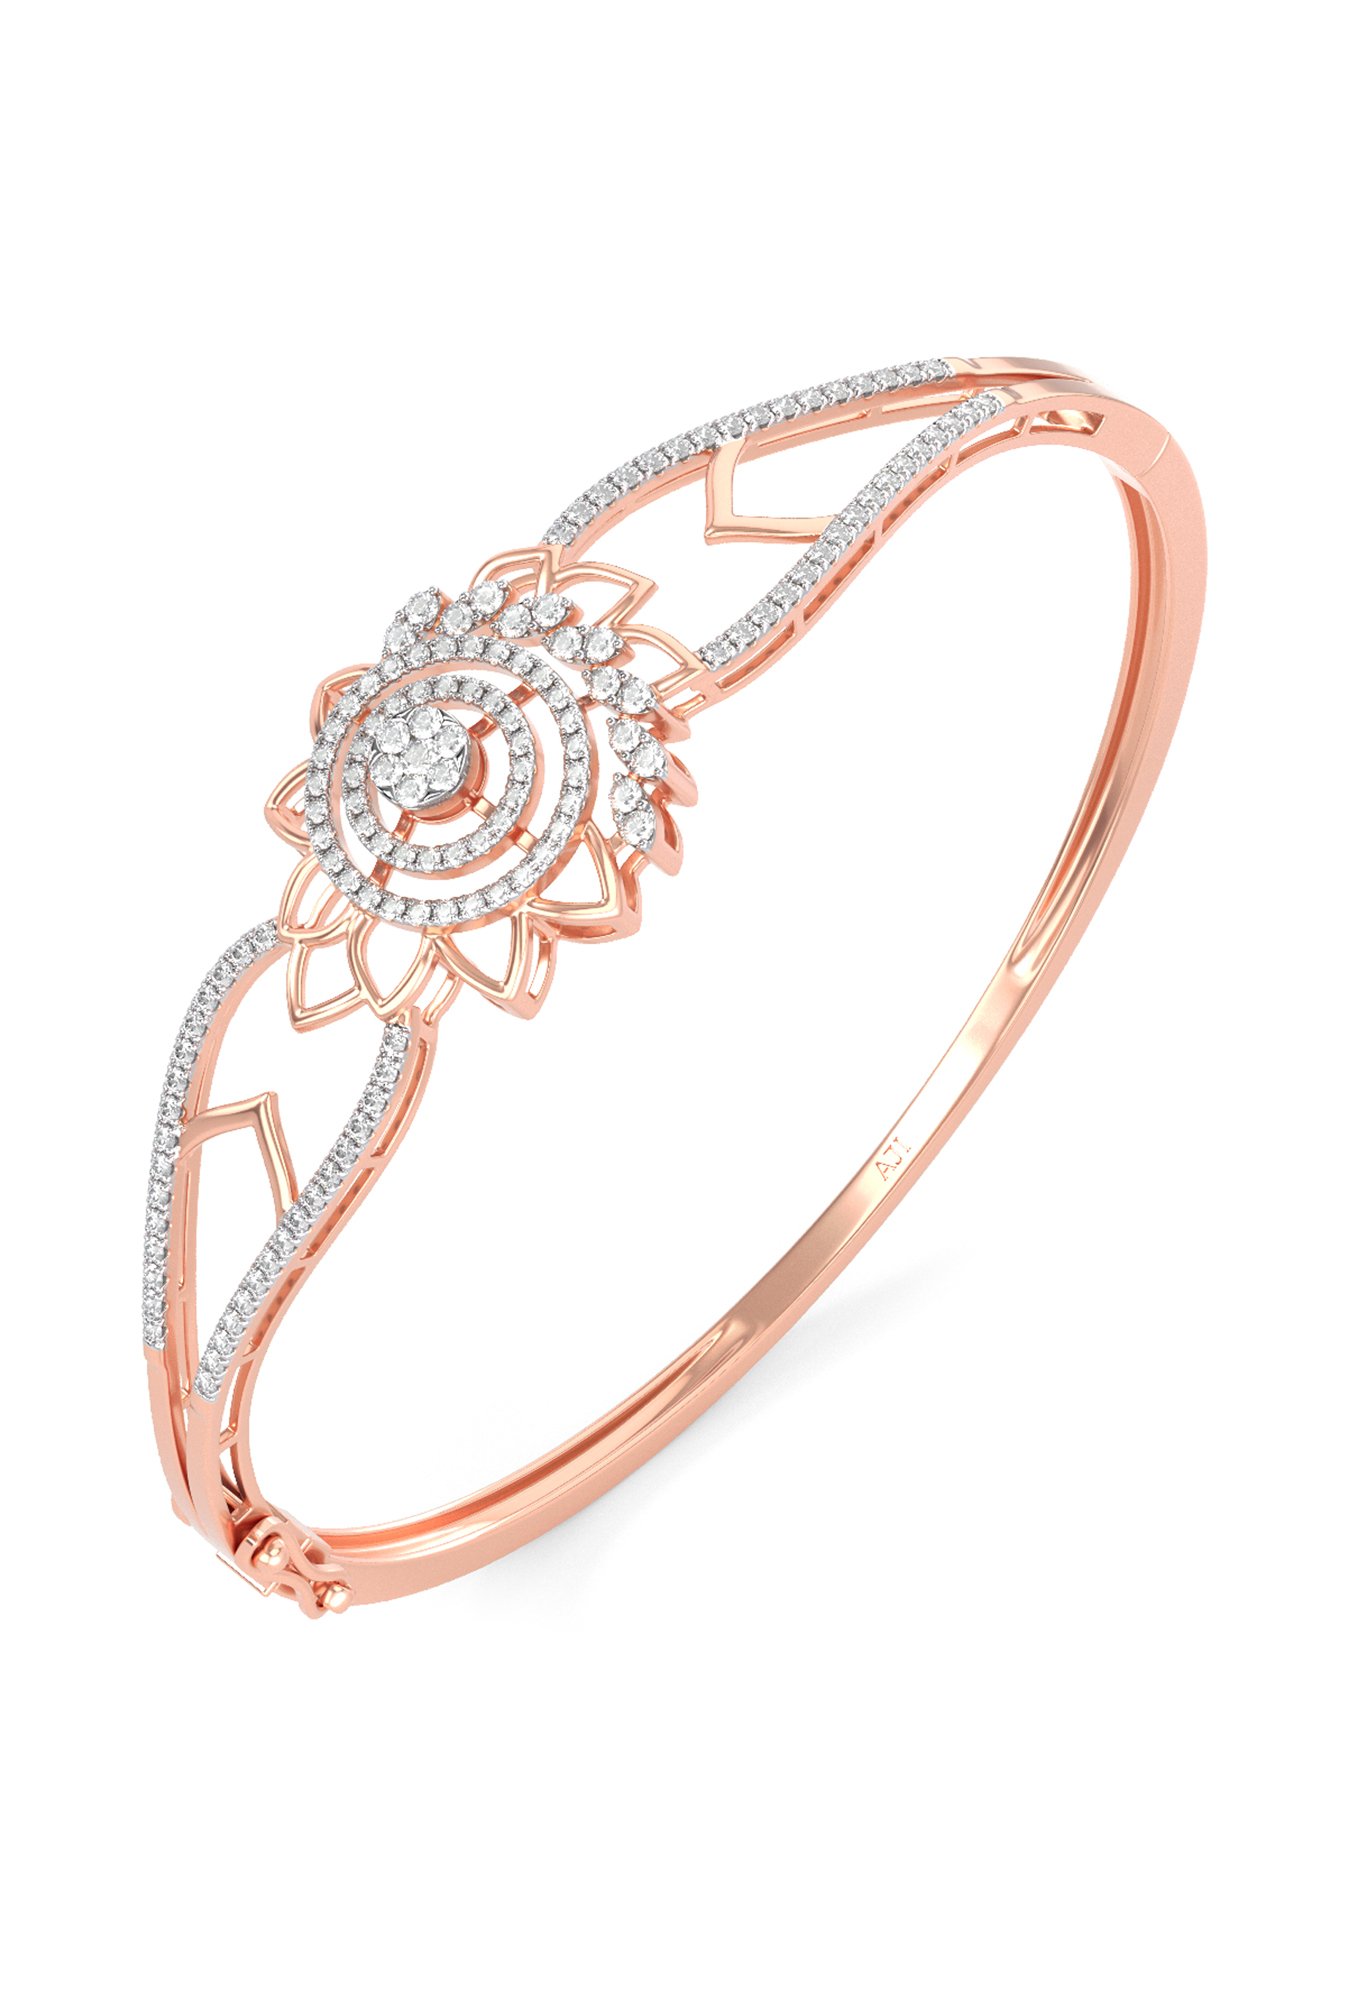 Buy wedding wear diamond bracelet in 14k  18k gold  Radiant Bay